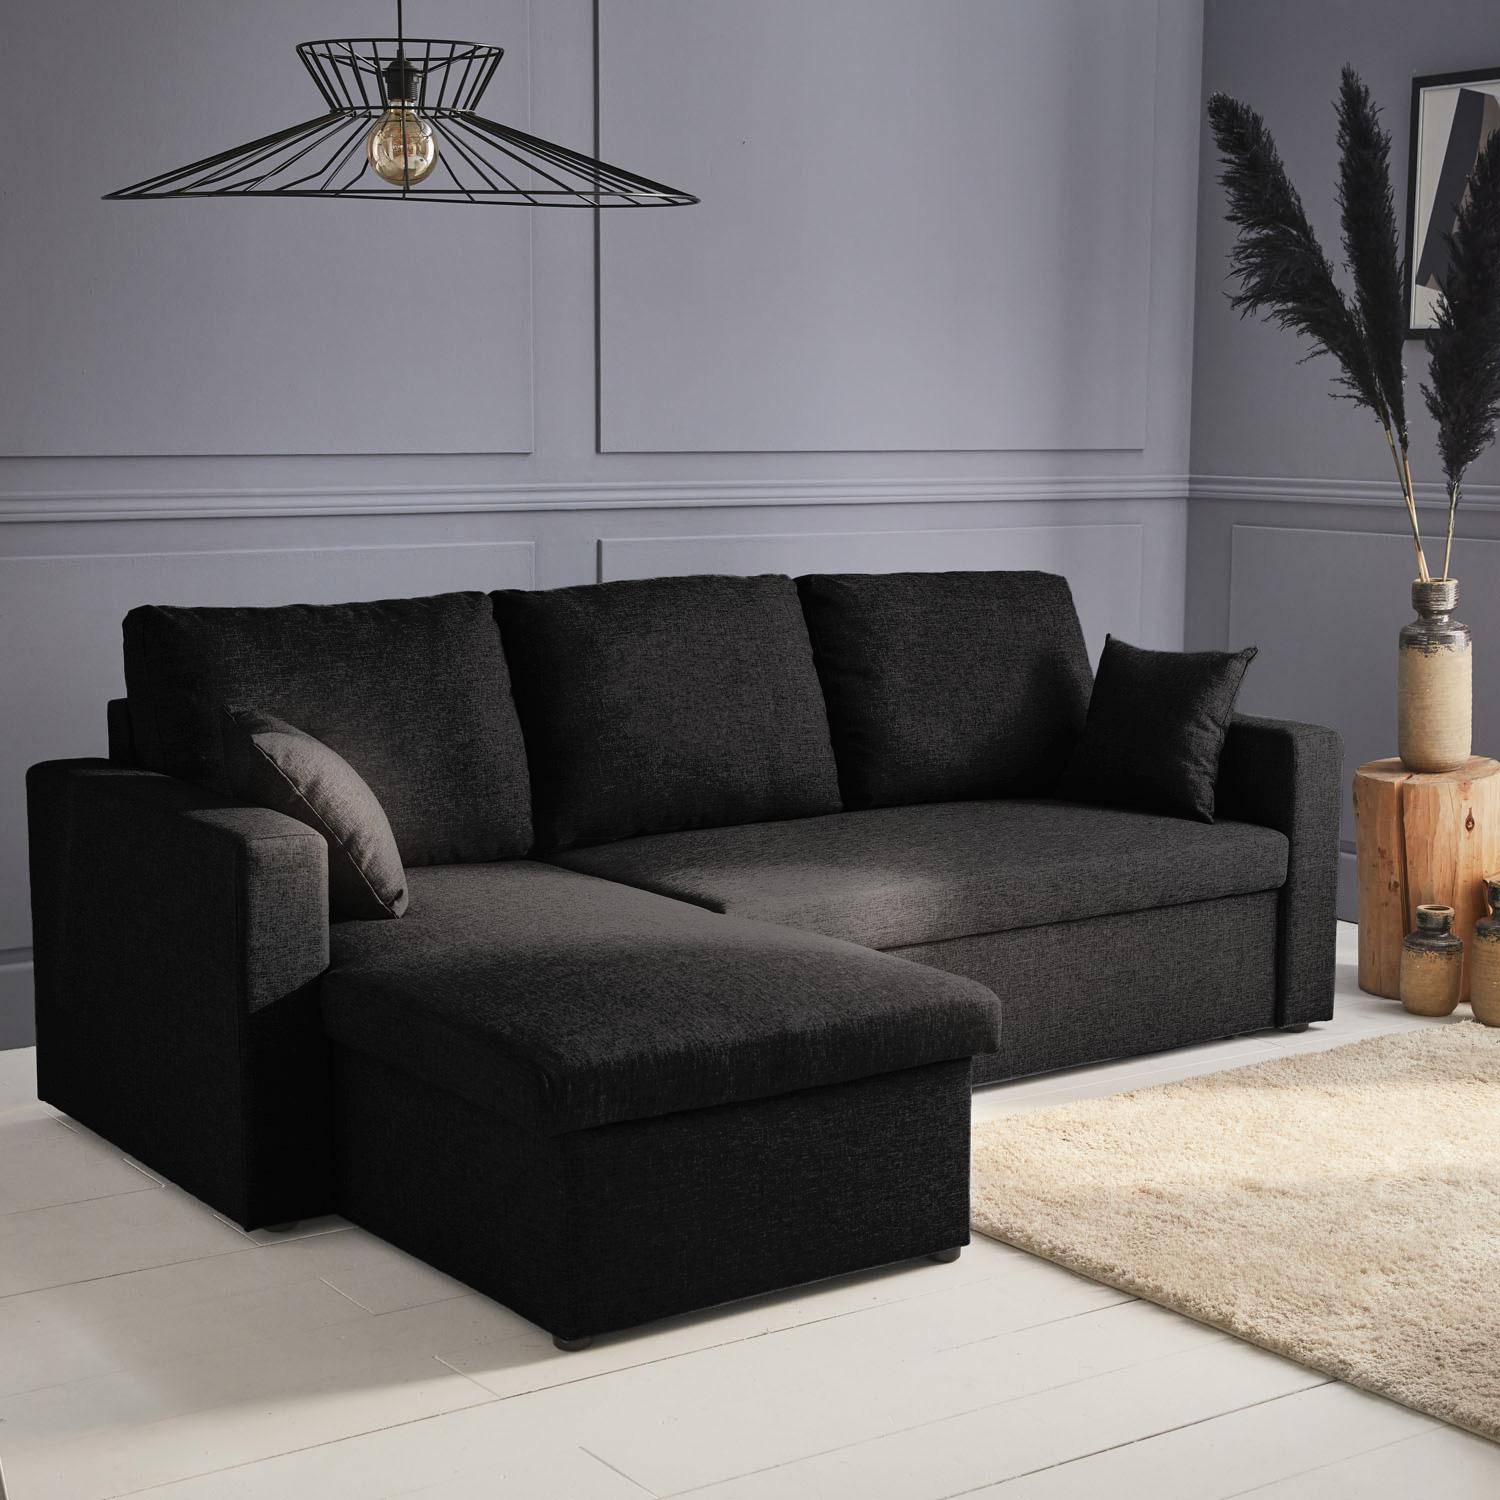 3-seater reversible black corner sofa bed with storage box, black L219xD81xH68cm, IDA,sweeek,Photo1